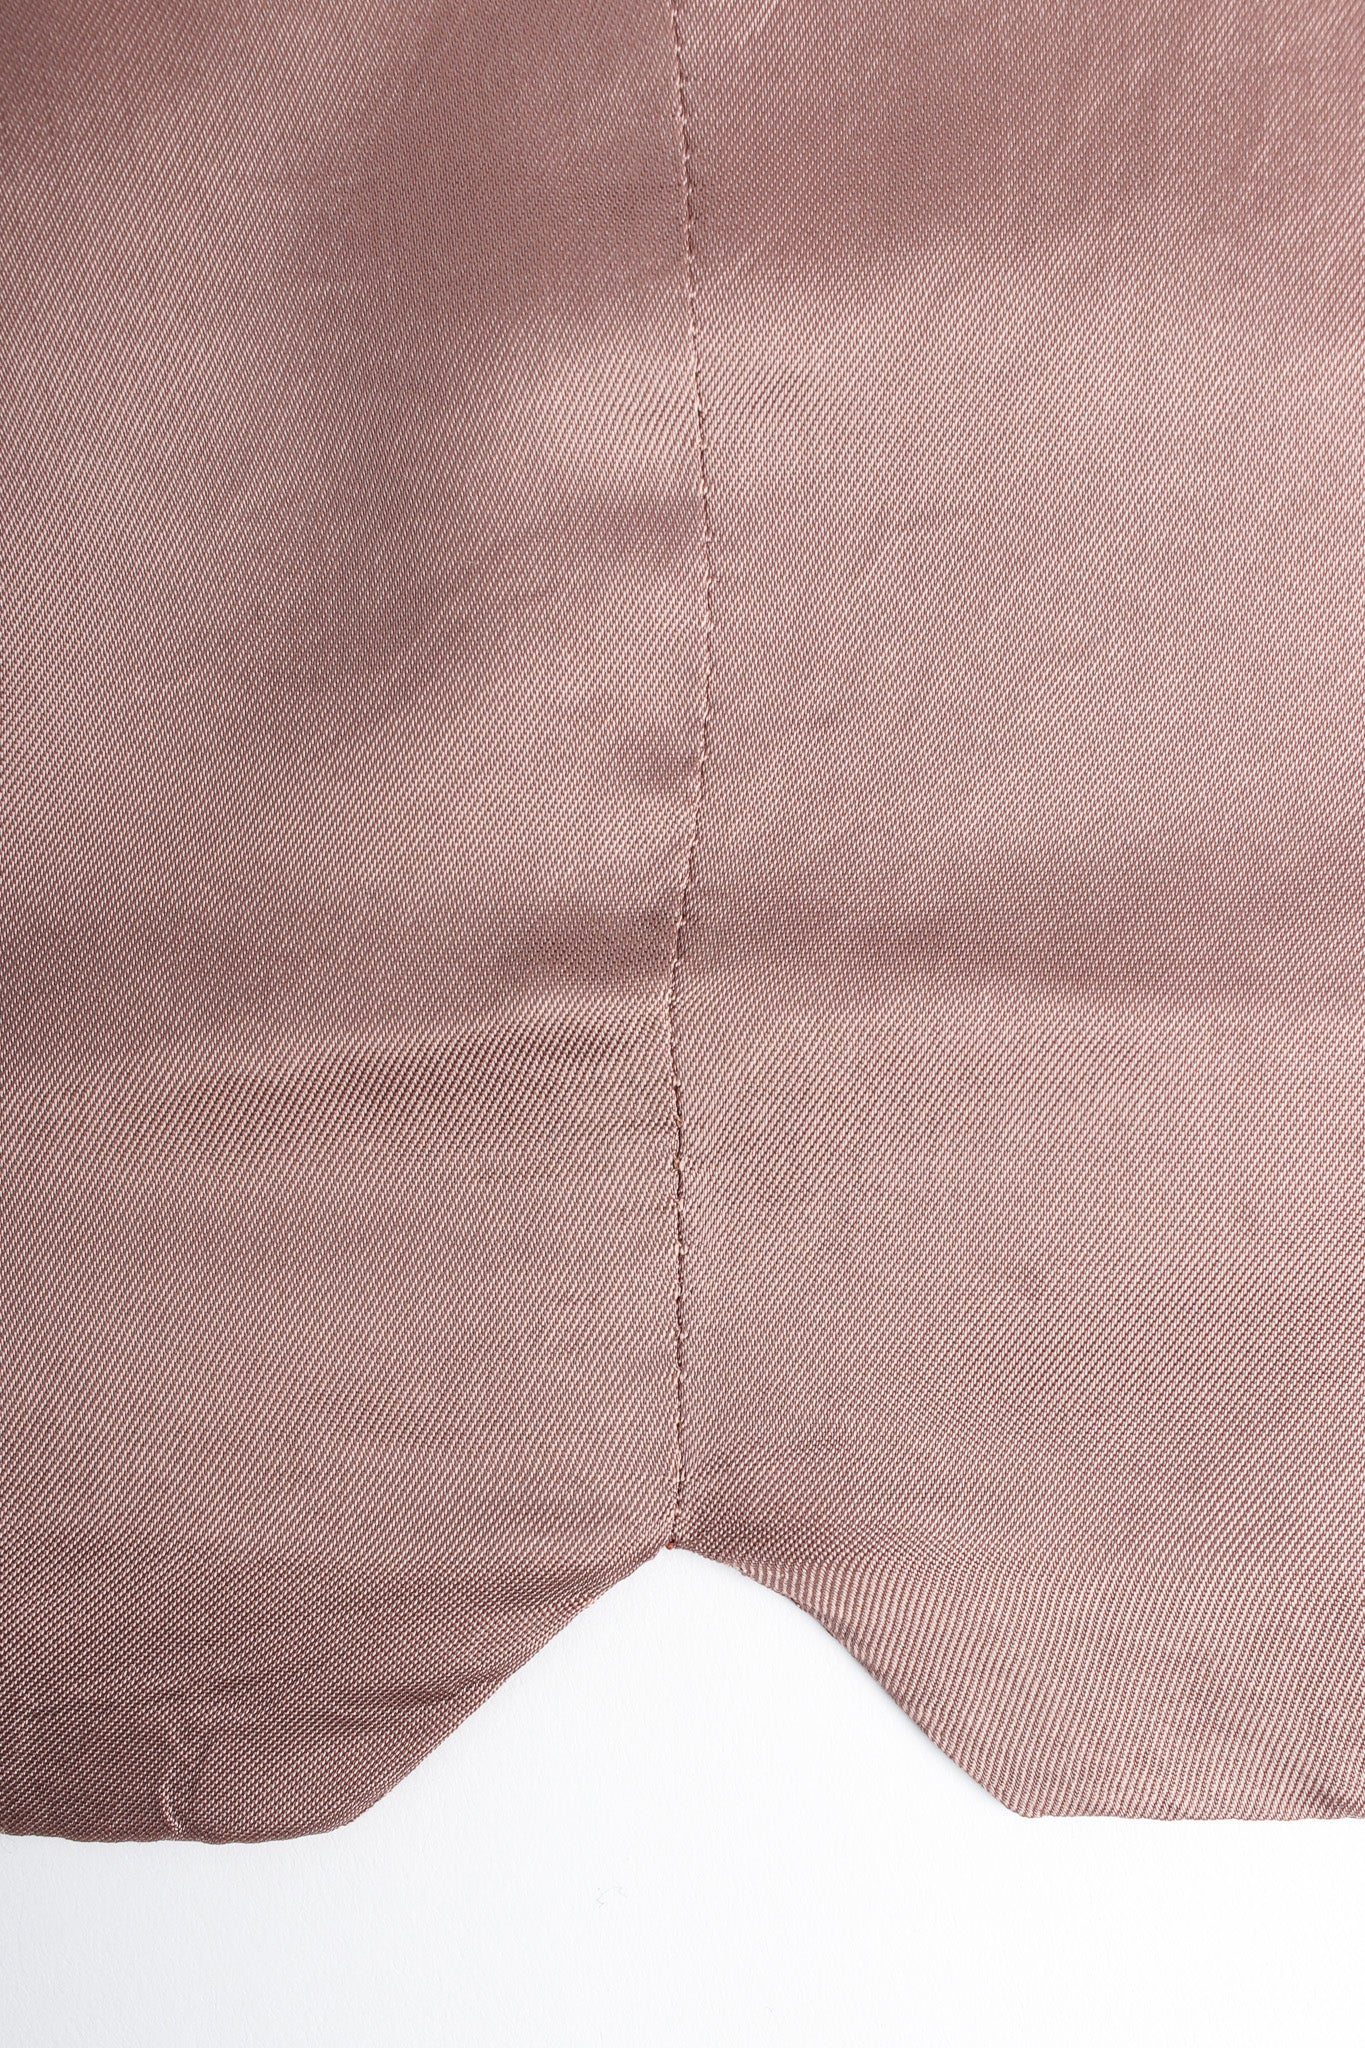 Vintage Dries Van Noten Floral Silk Jacket, Vest, & Skirt Set vest back Vent @ Recess LA